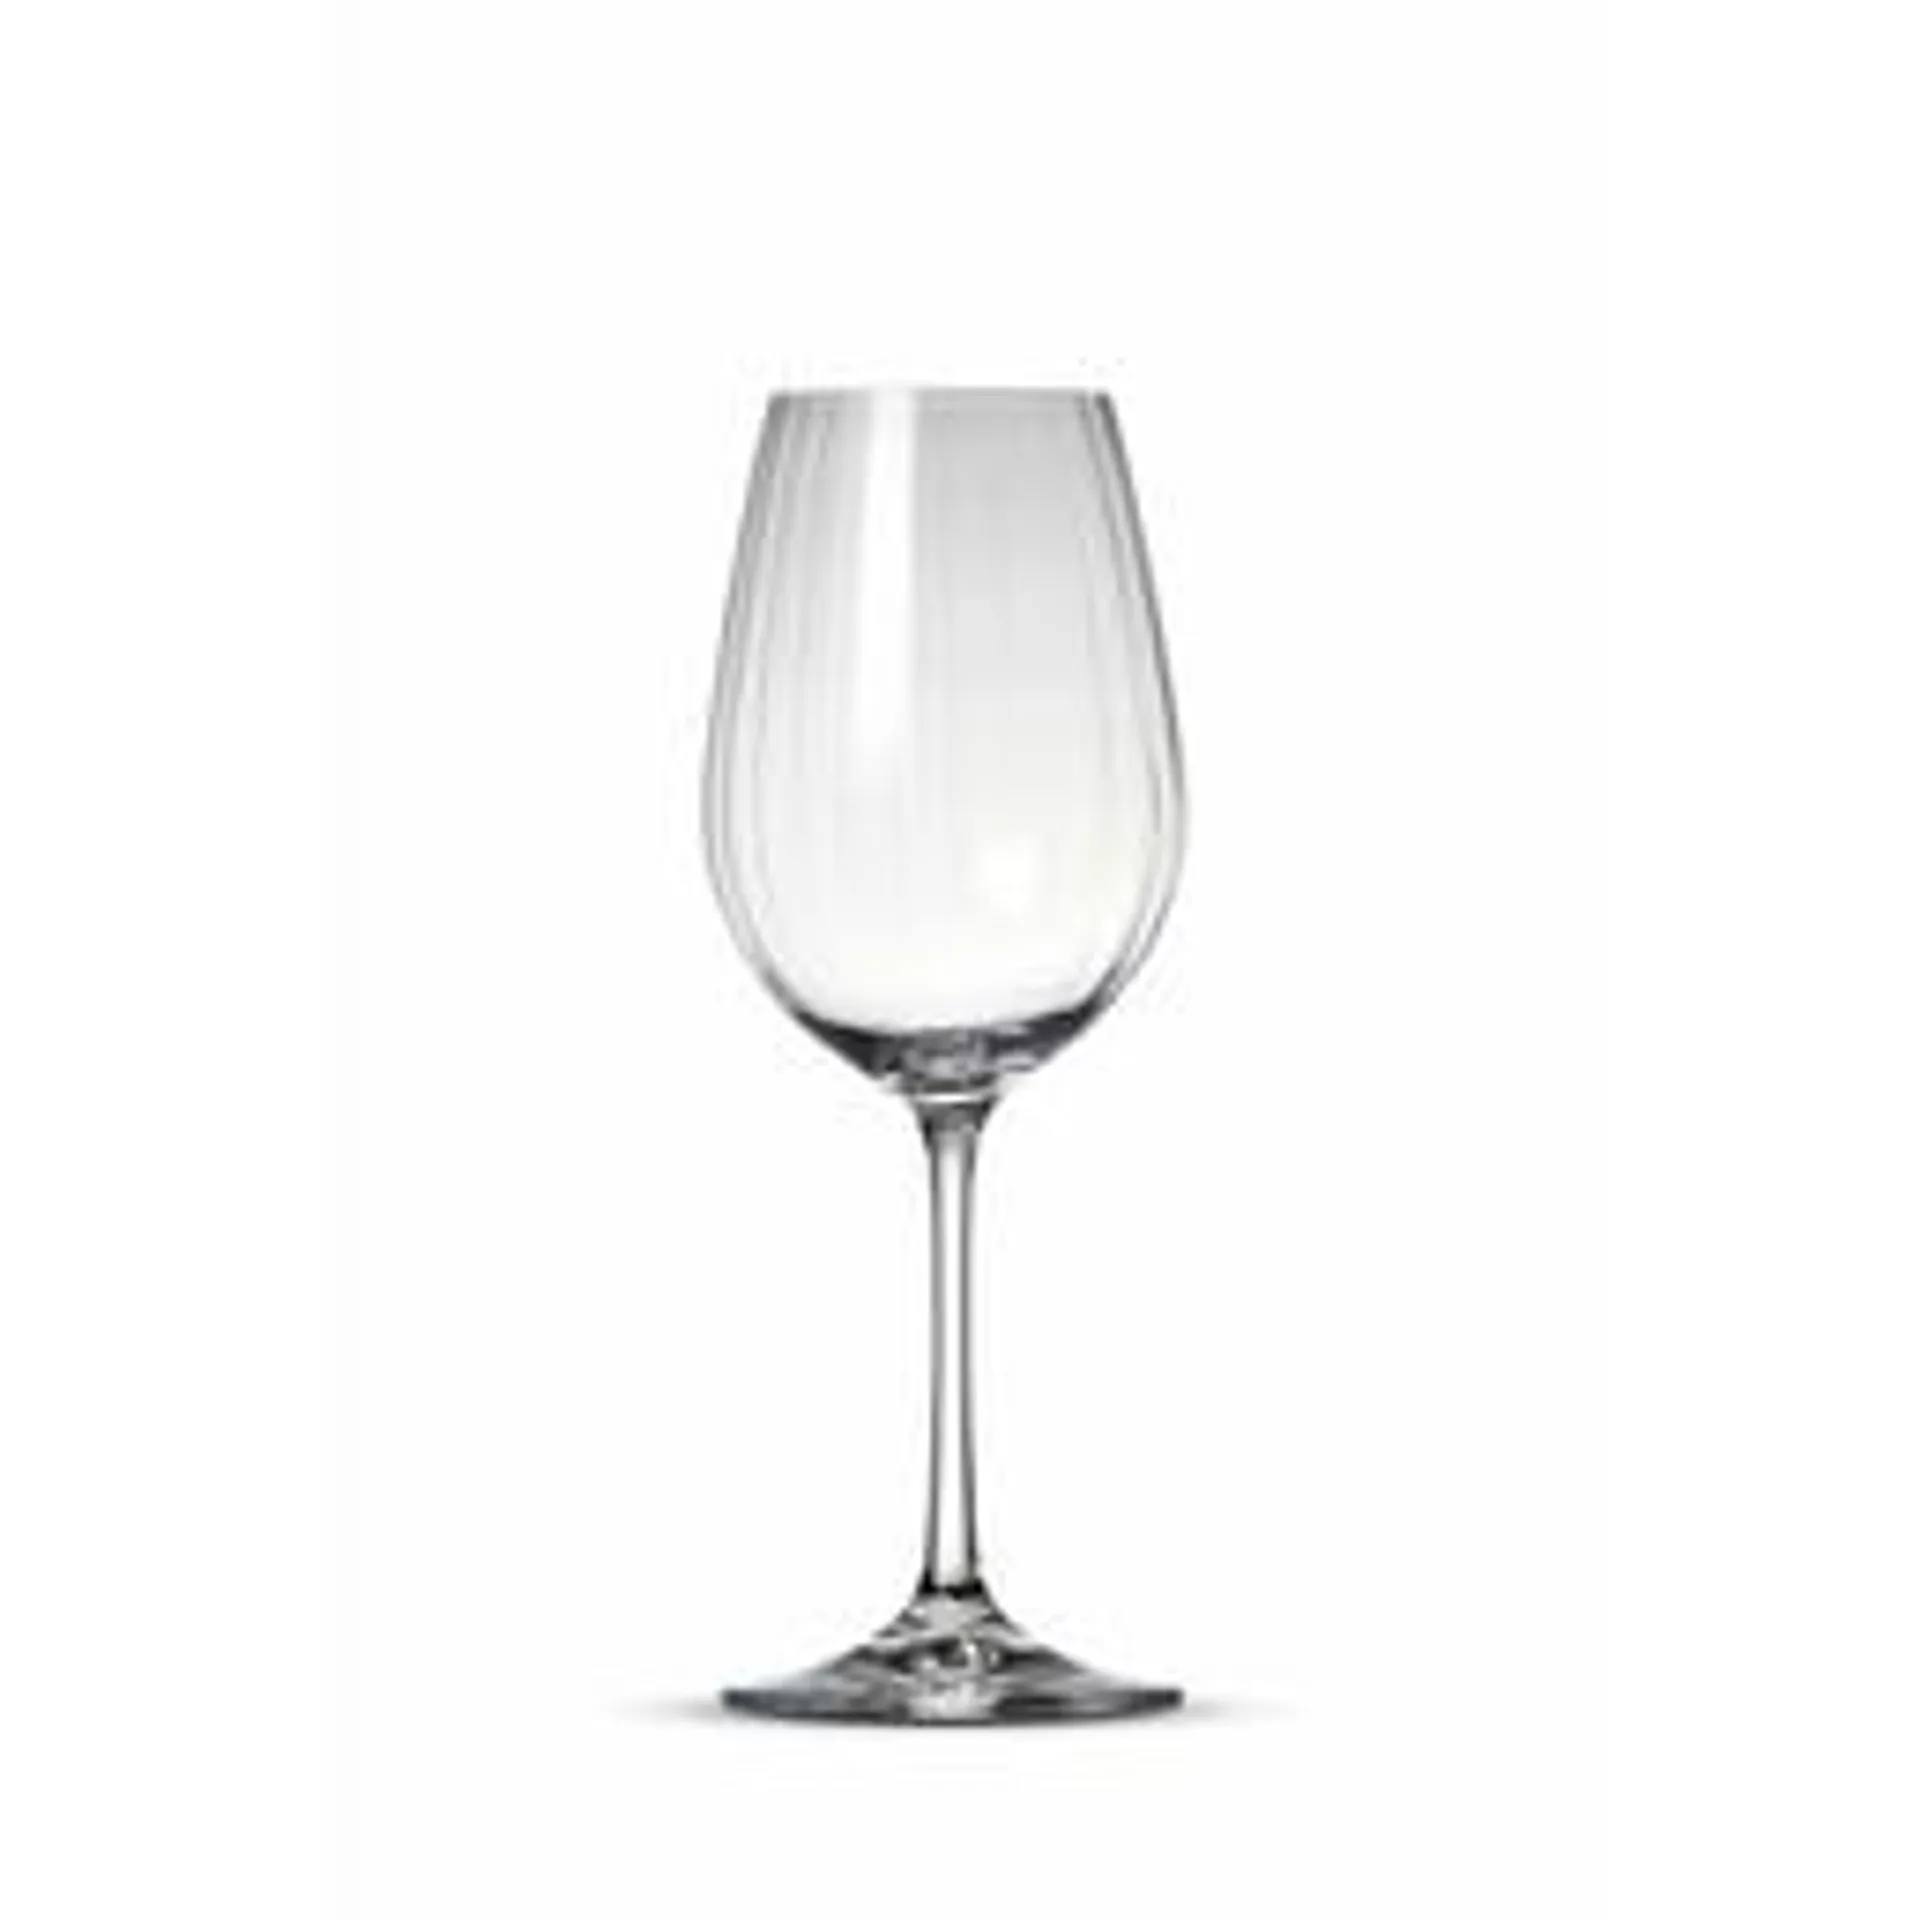 Fine 2 Dine Optic White Wine Glass, 350ml